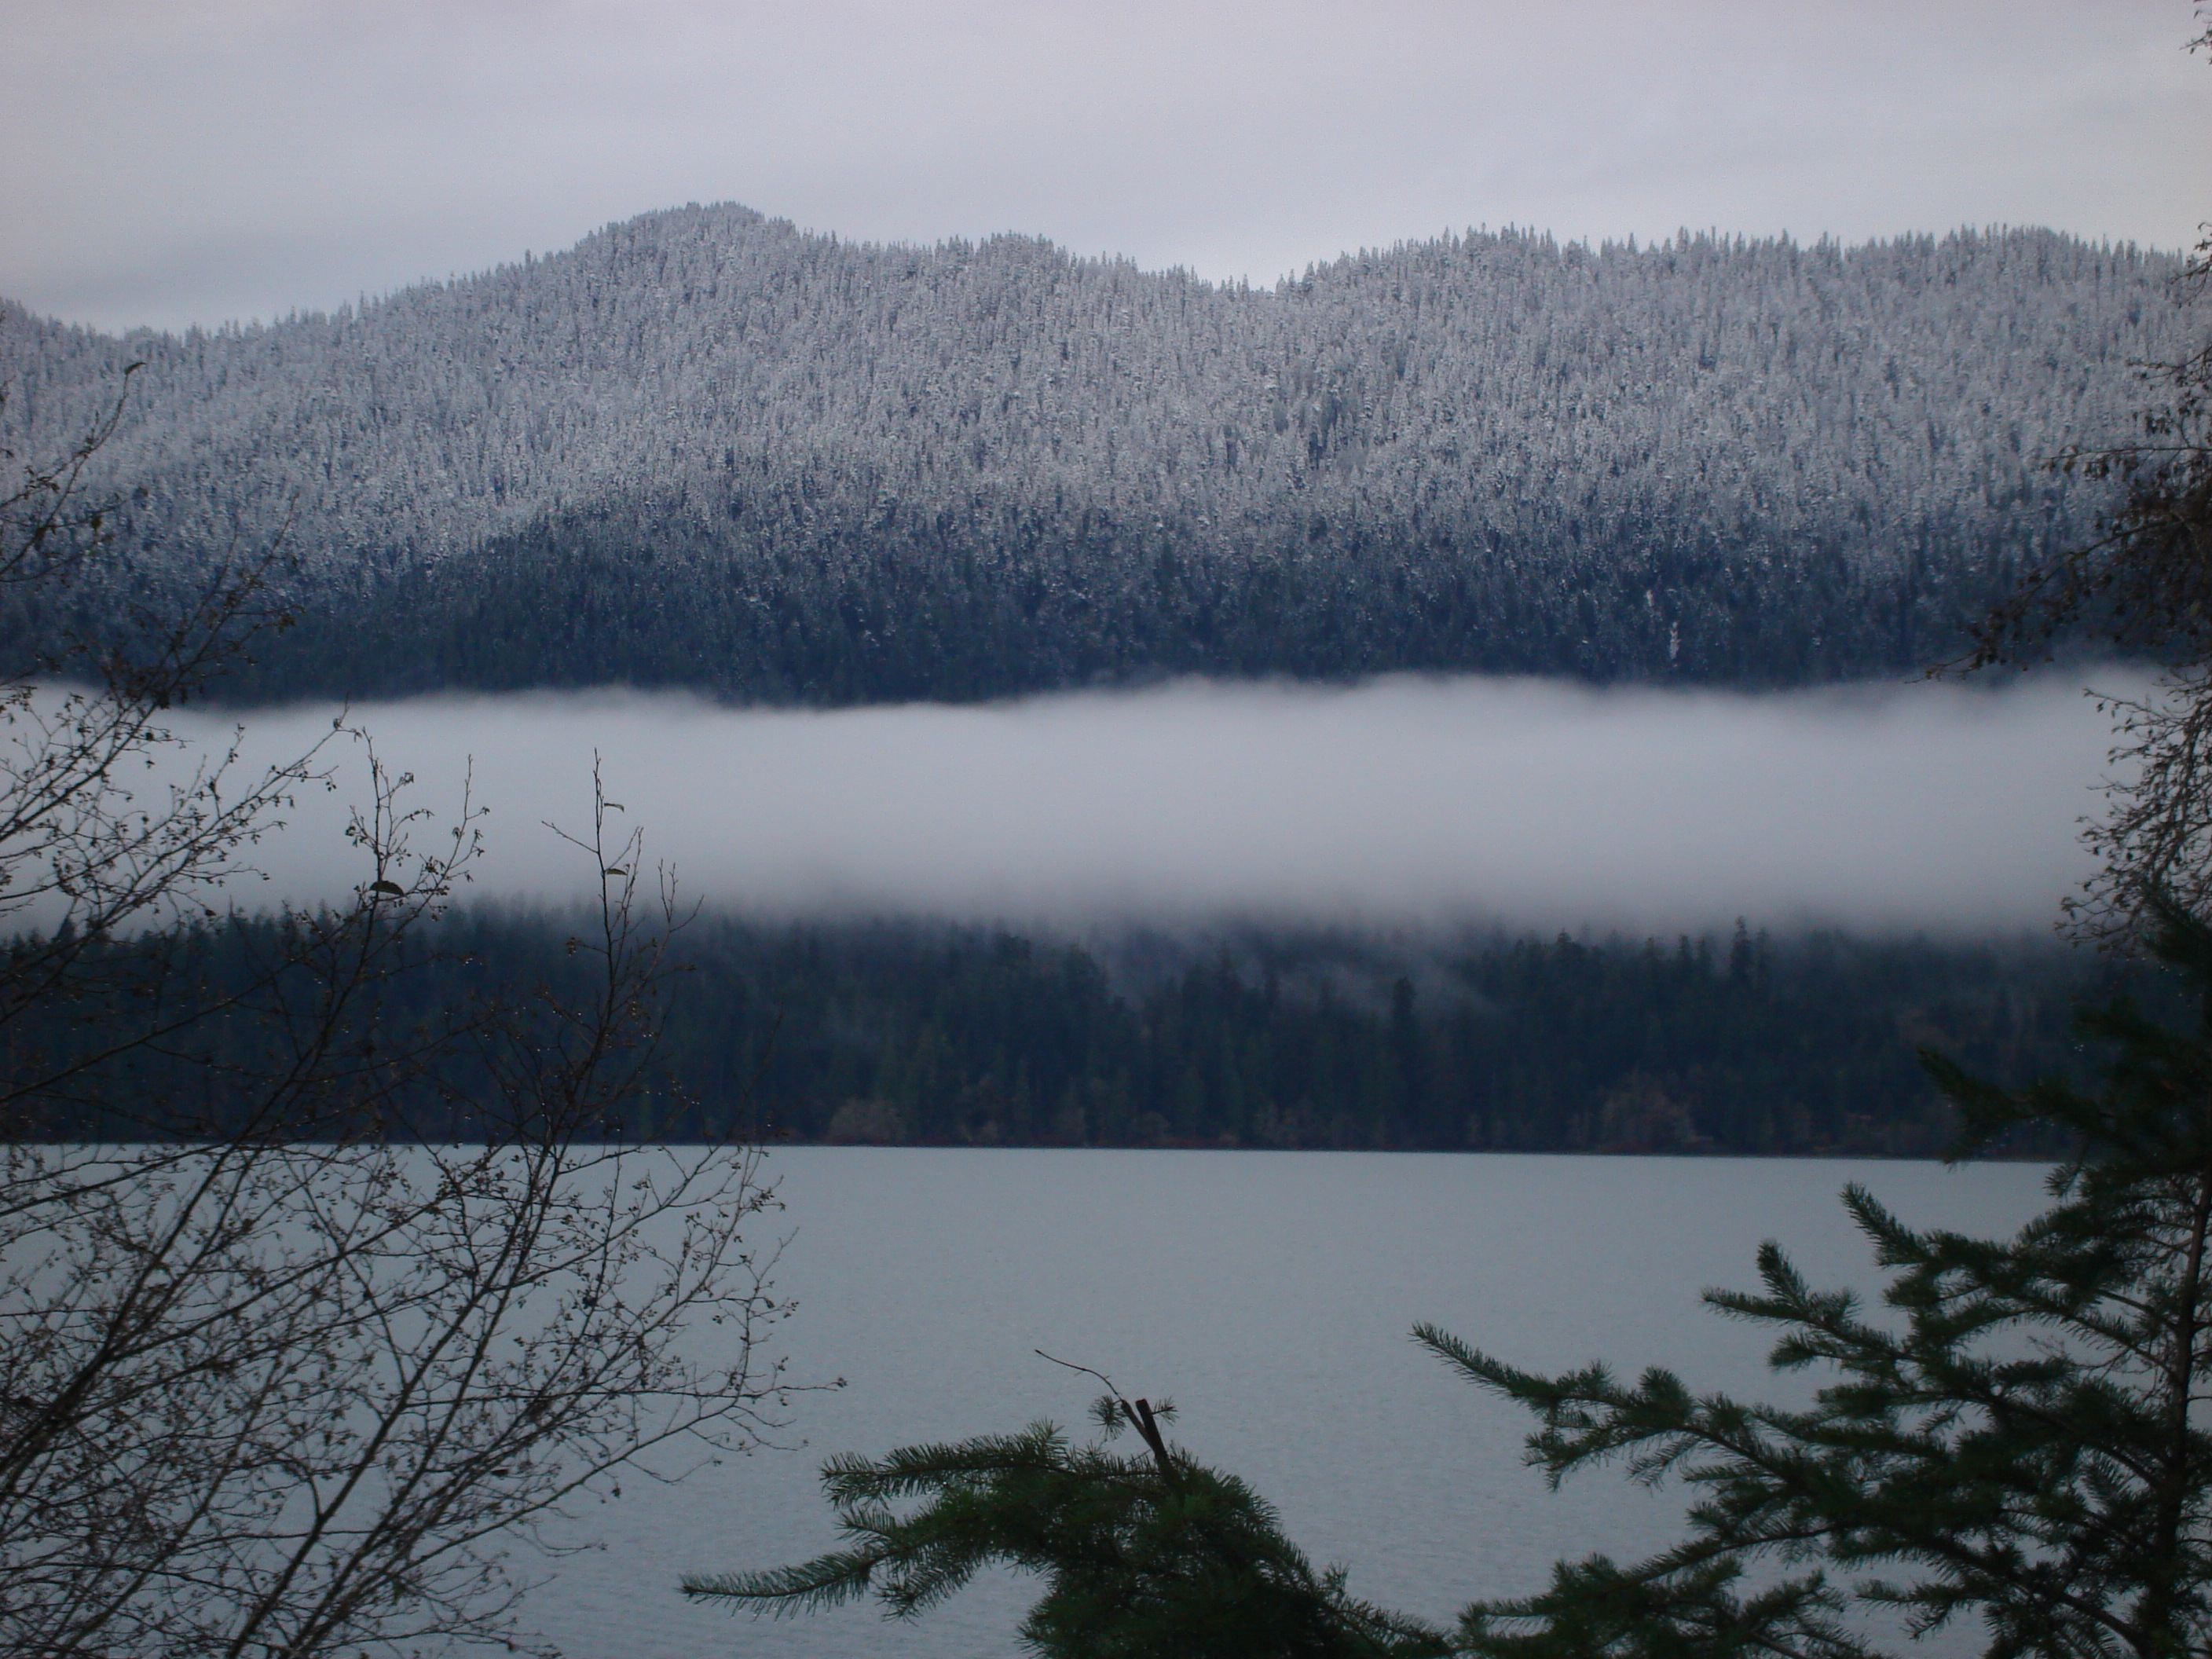 View of the Lake, Nov. 2010